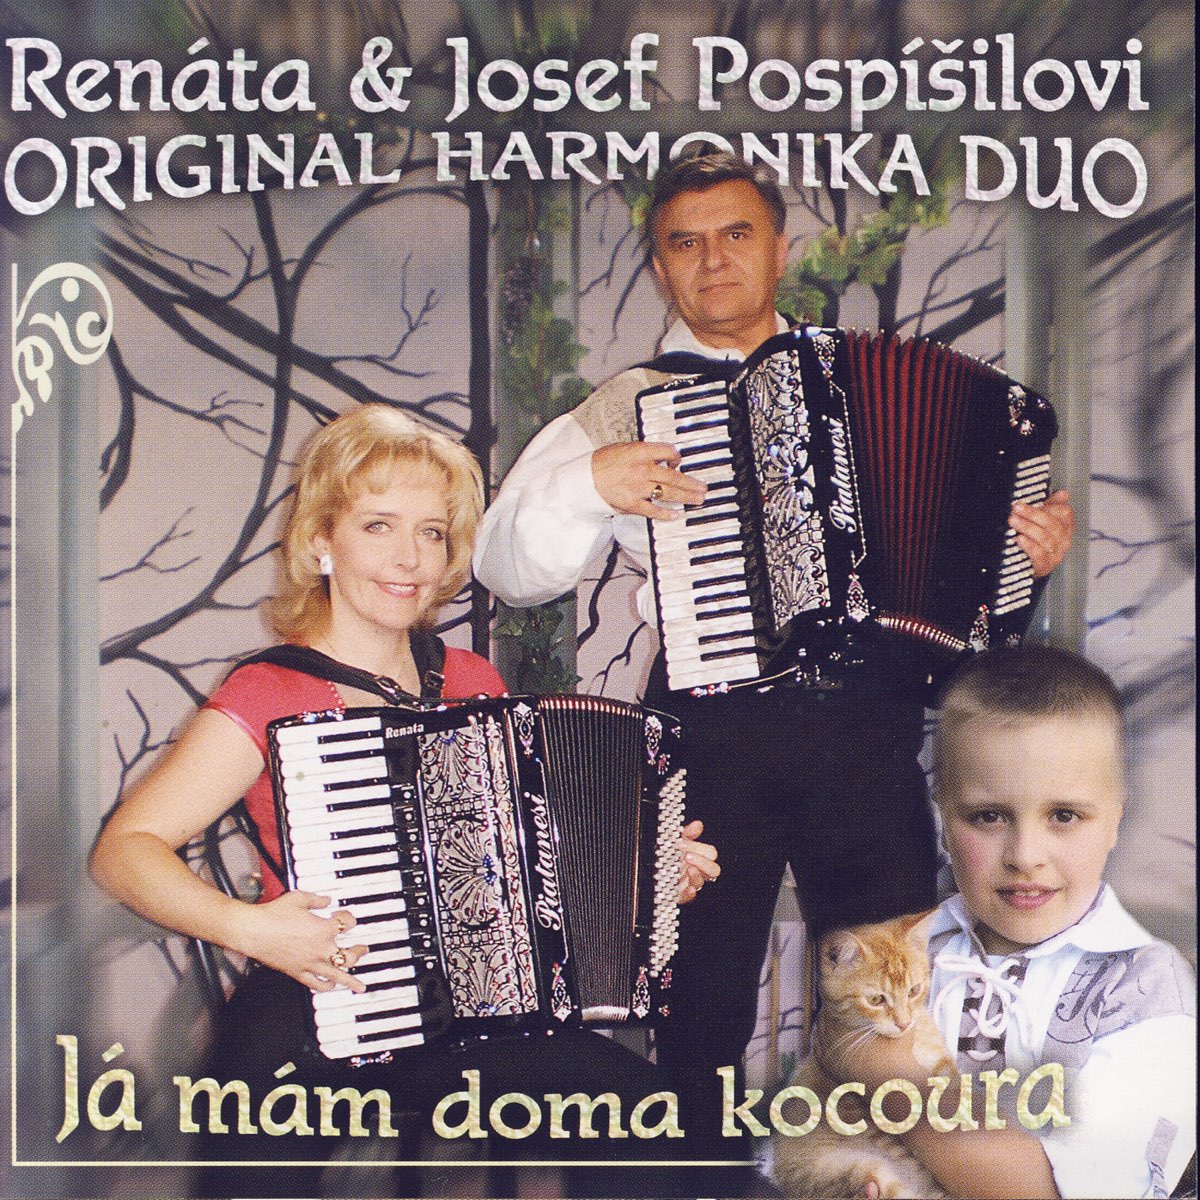 Já Mám Doma Kocoura by Renata & Josef Pospisilovi on Apple Music